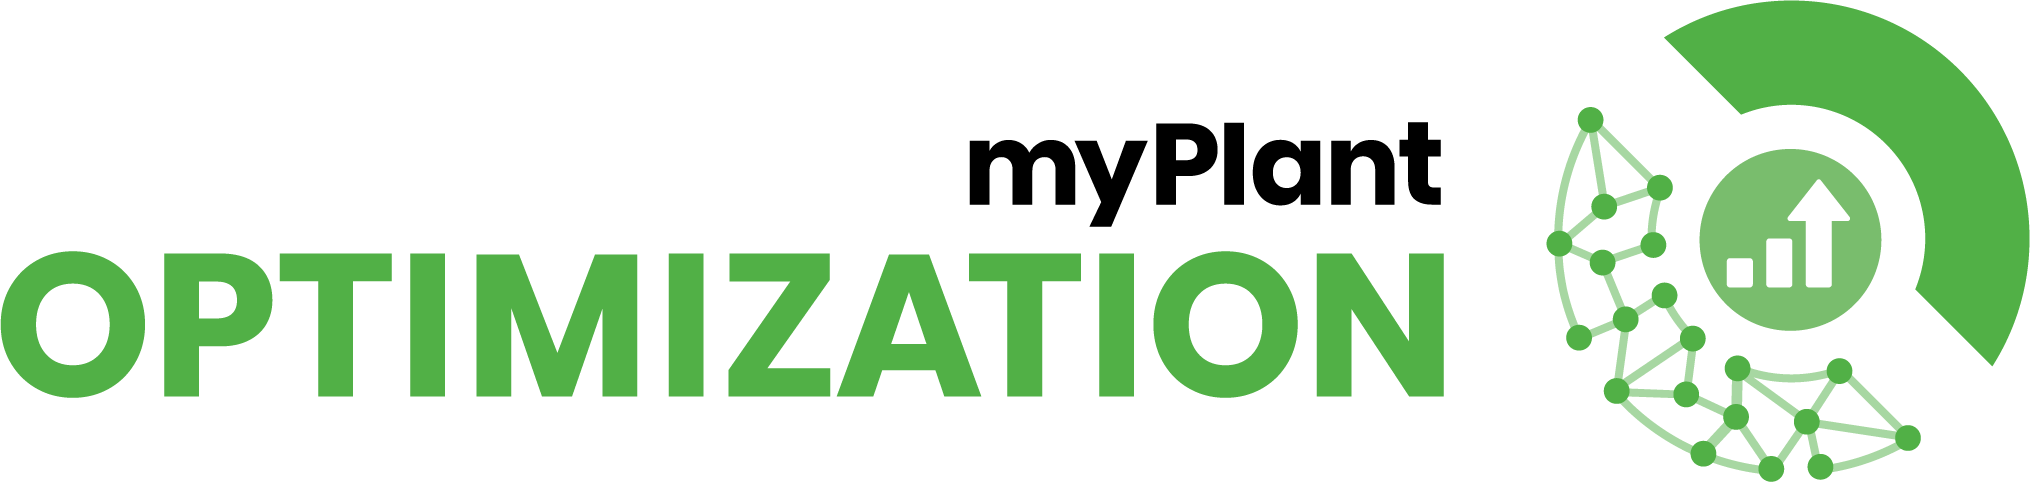 <span data-brand>myPlant</span> Optimization Logo